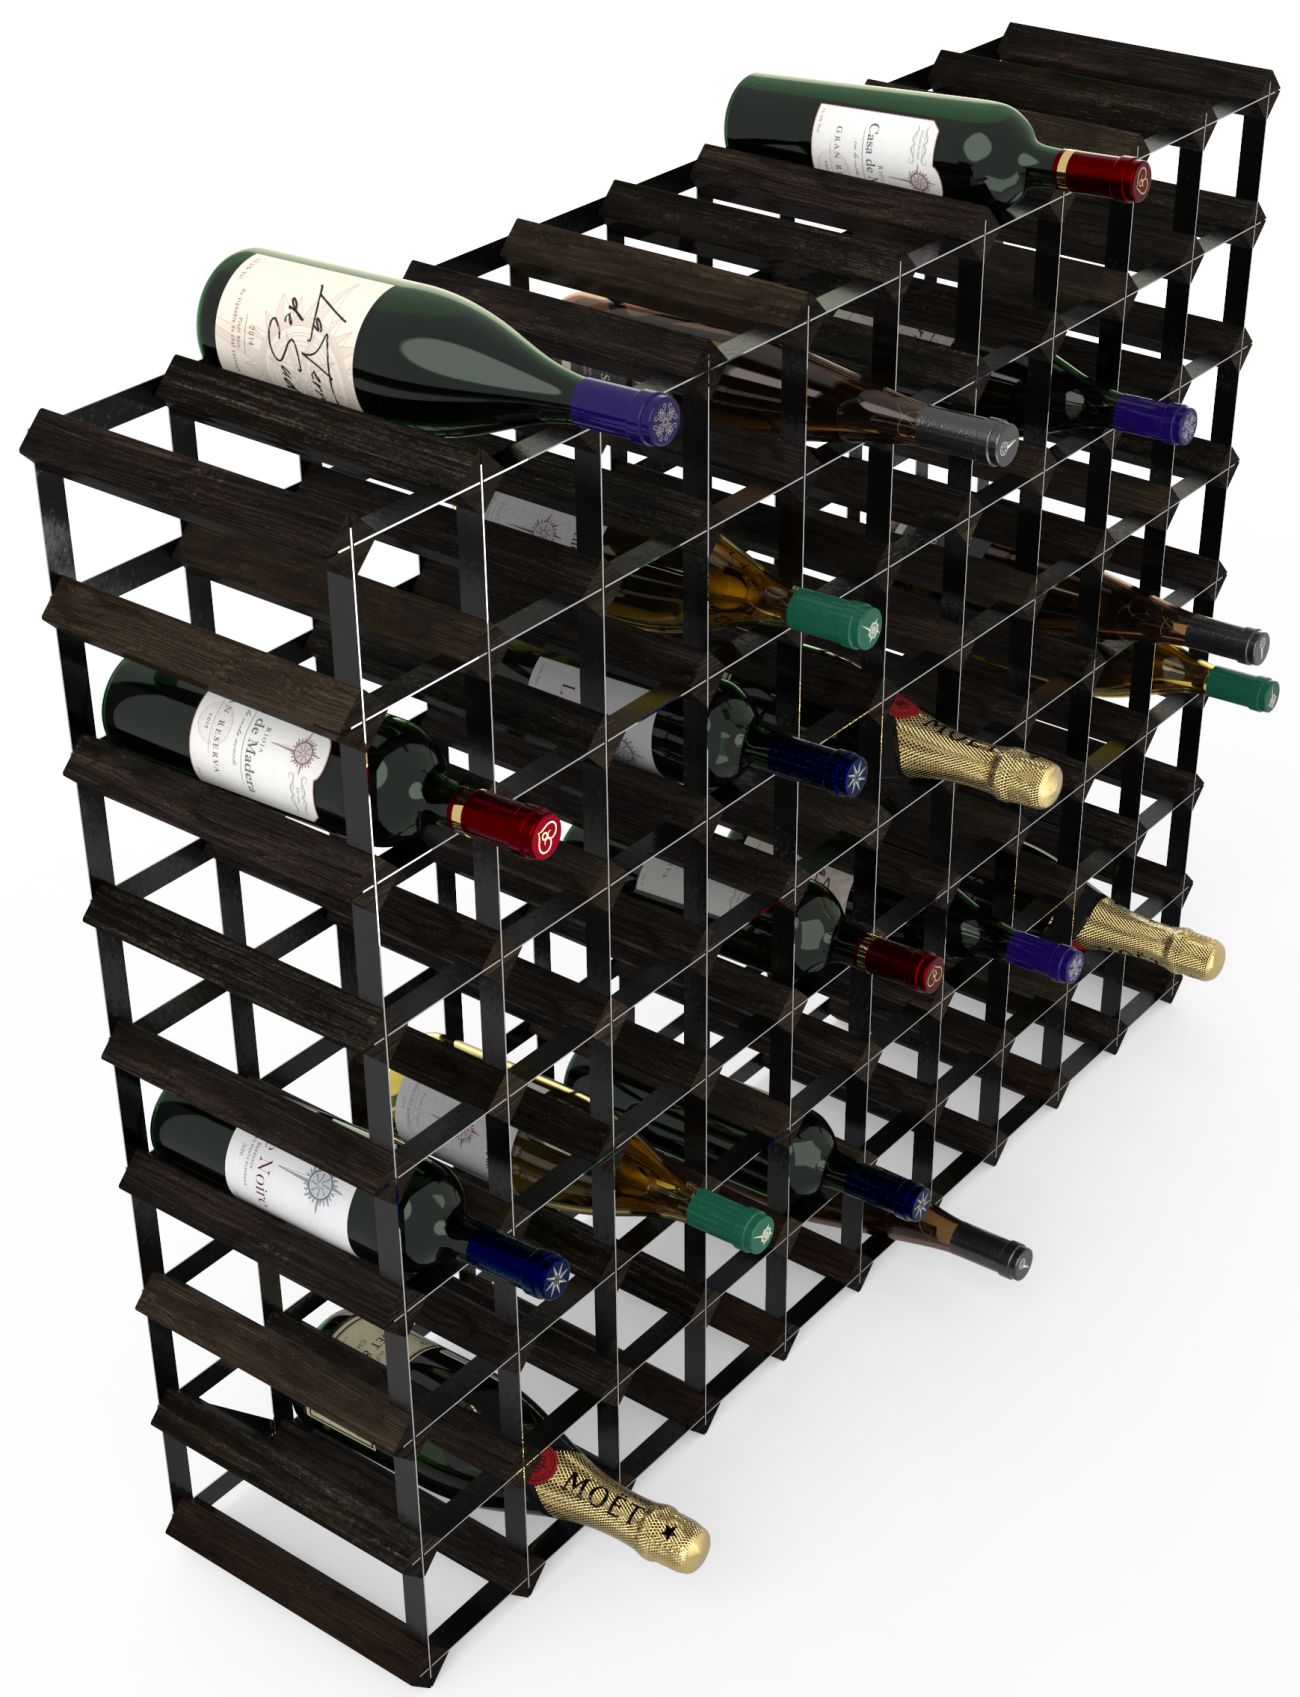 Stojan na víno RTA na 90 lahví, černý jasan - černá ocel / sestavený